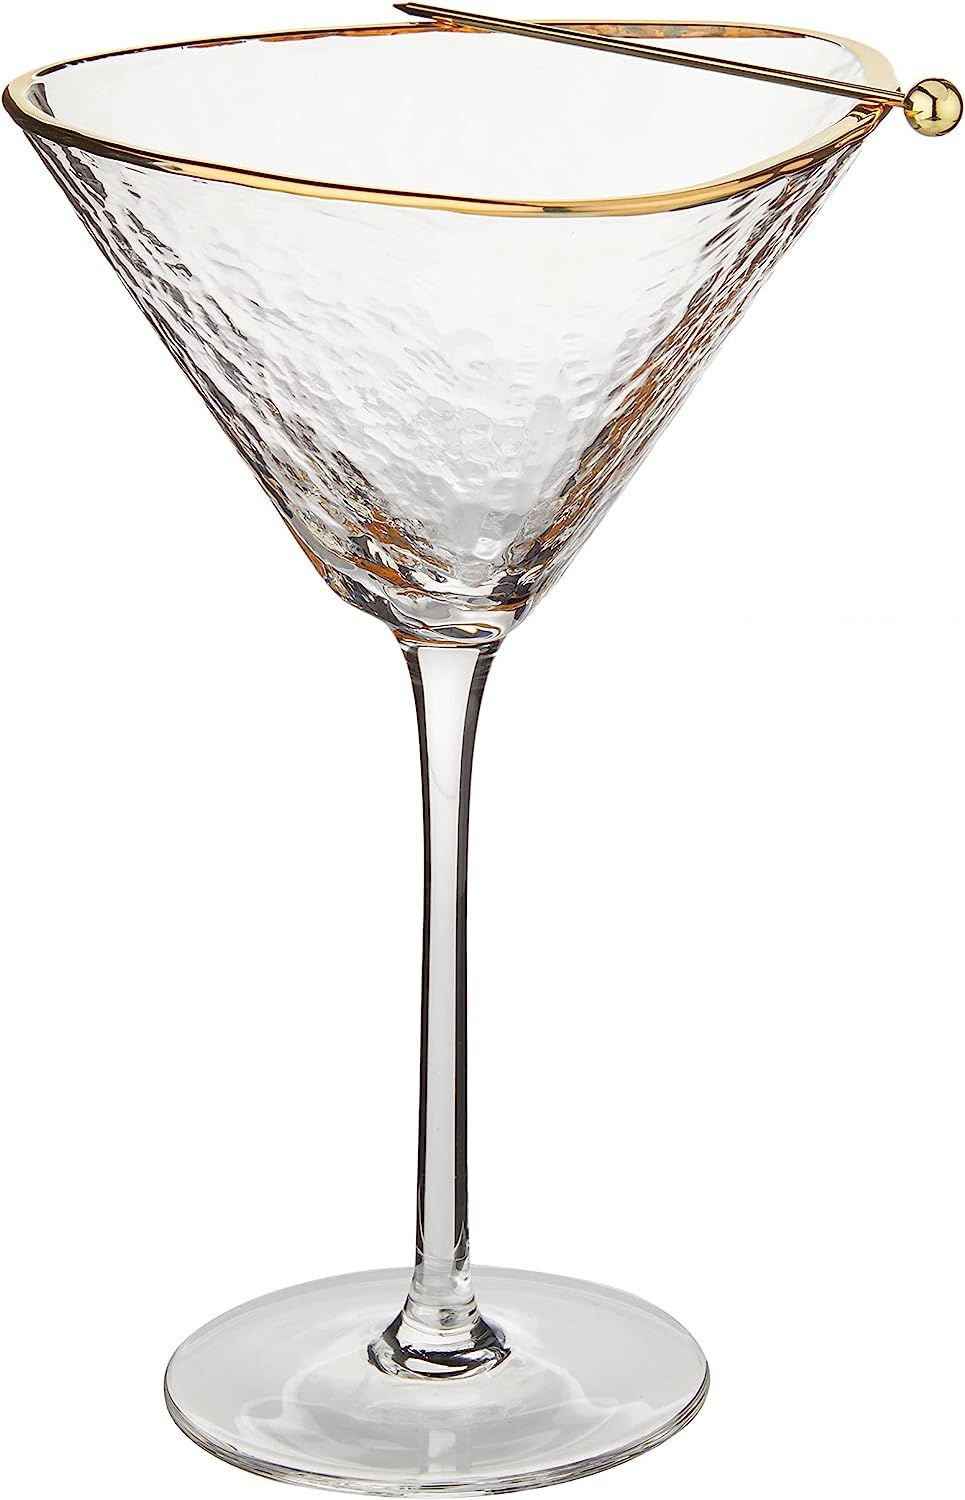 Sister.ly Drinkware Handmade Hammered Martini Glasses with Gold Rim - Set of 2 Gold Rim Martini G... | Amazon (US)